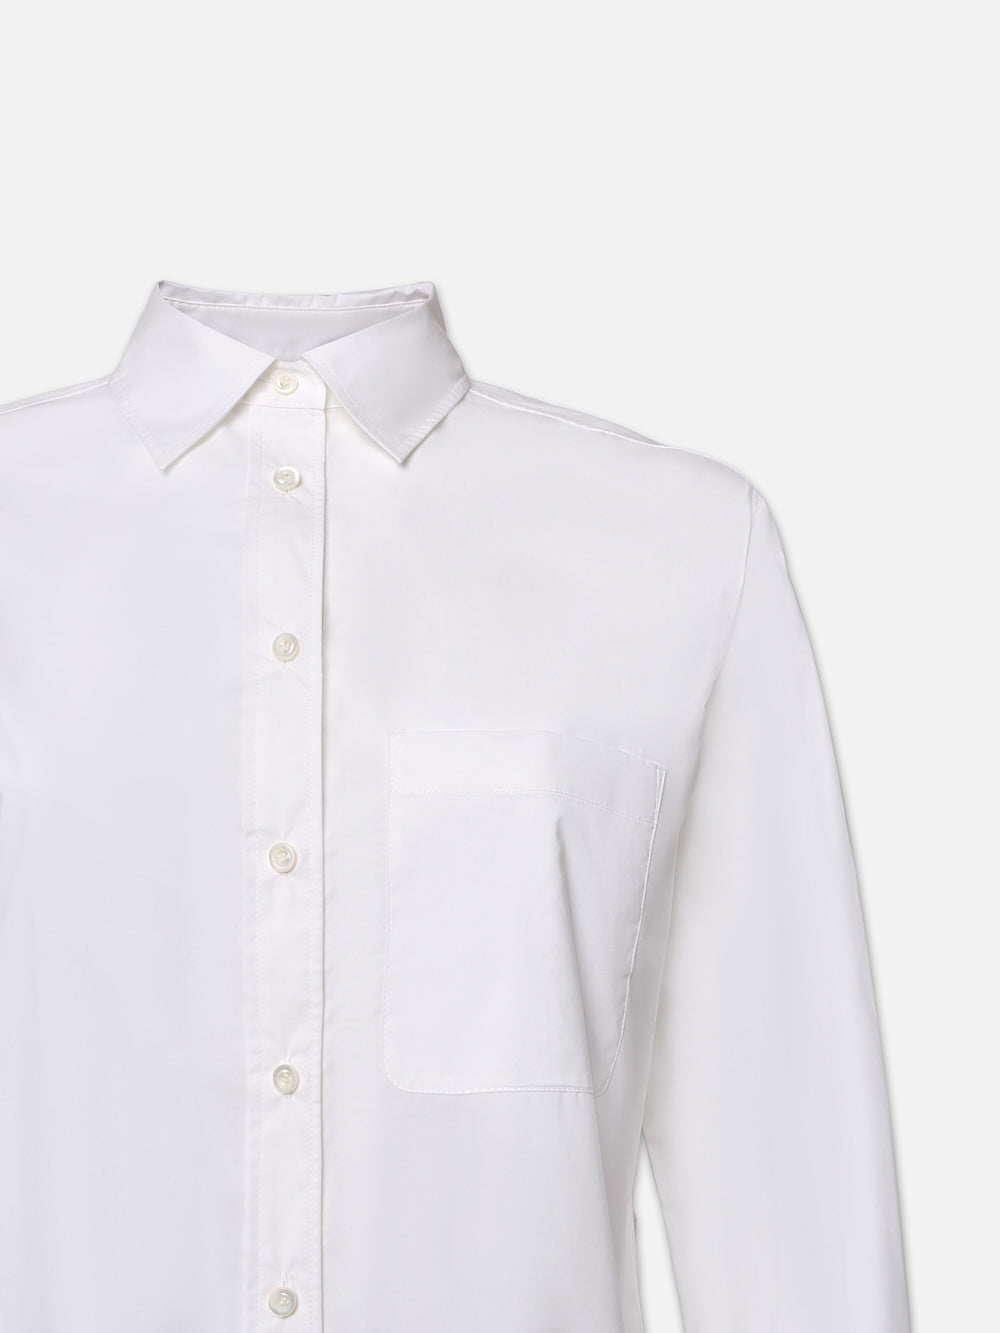 The Borrowed Pocket Shirt -- White